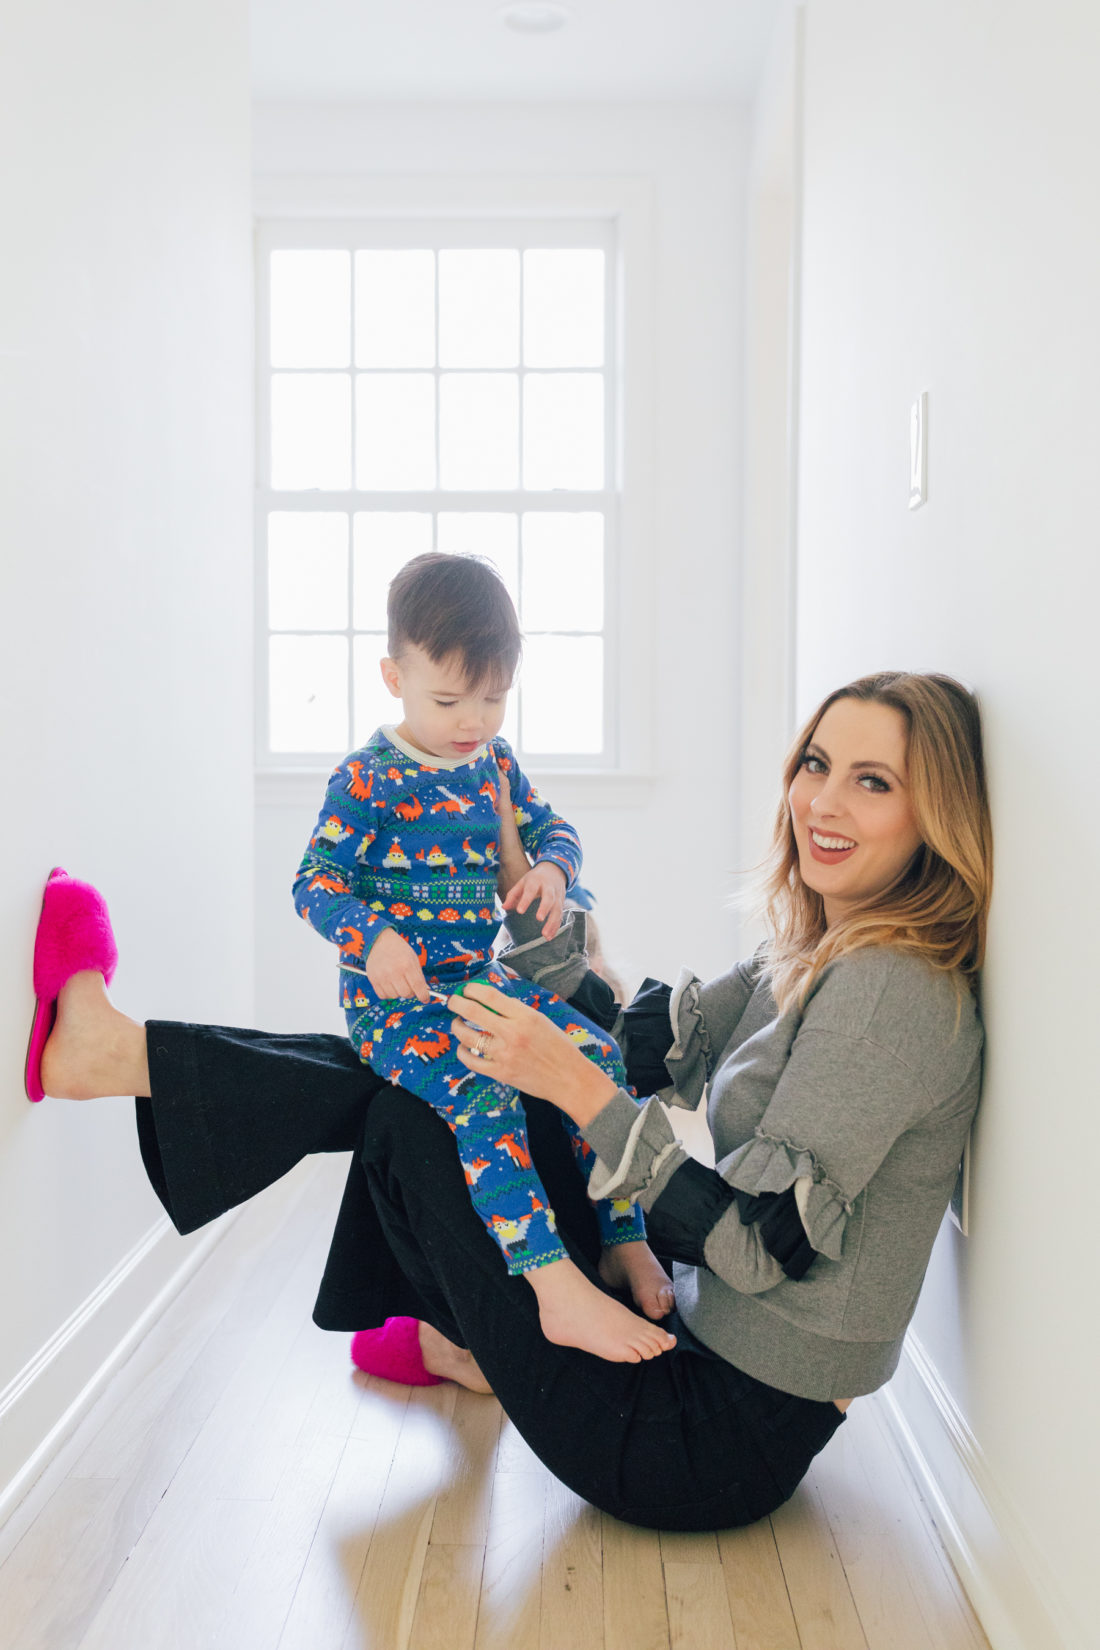 Eva Amurri Martino and her son Major wears printed pajamas while entertaining himself at home